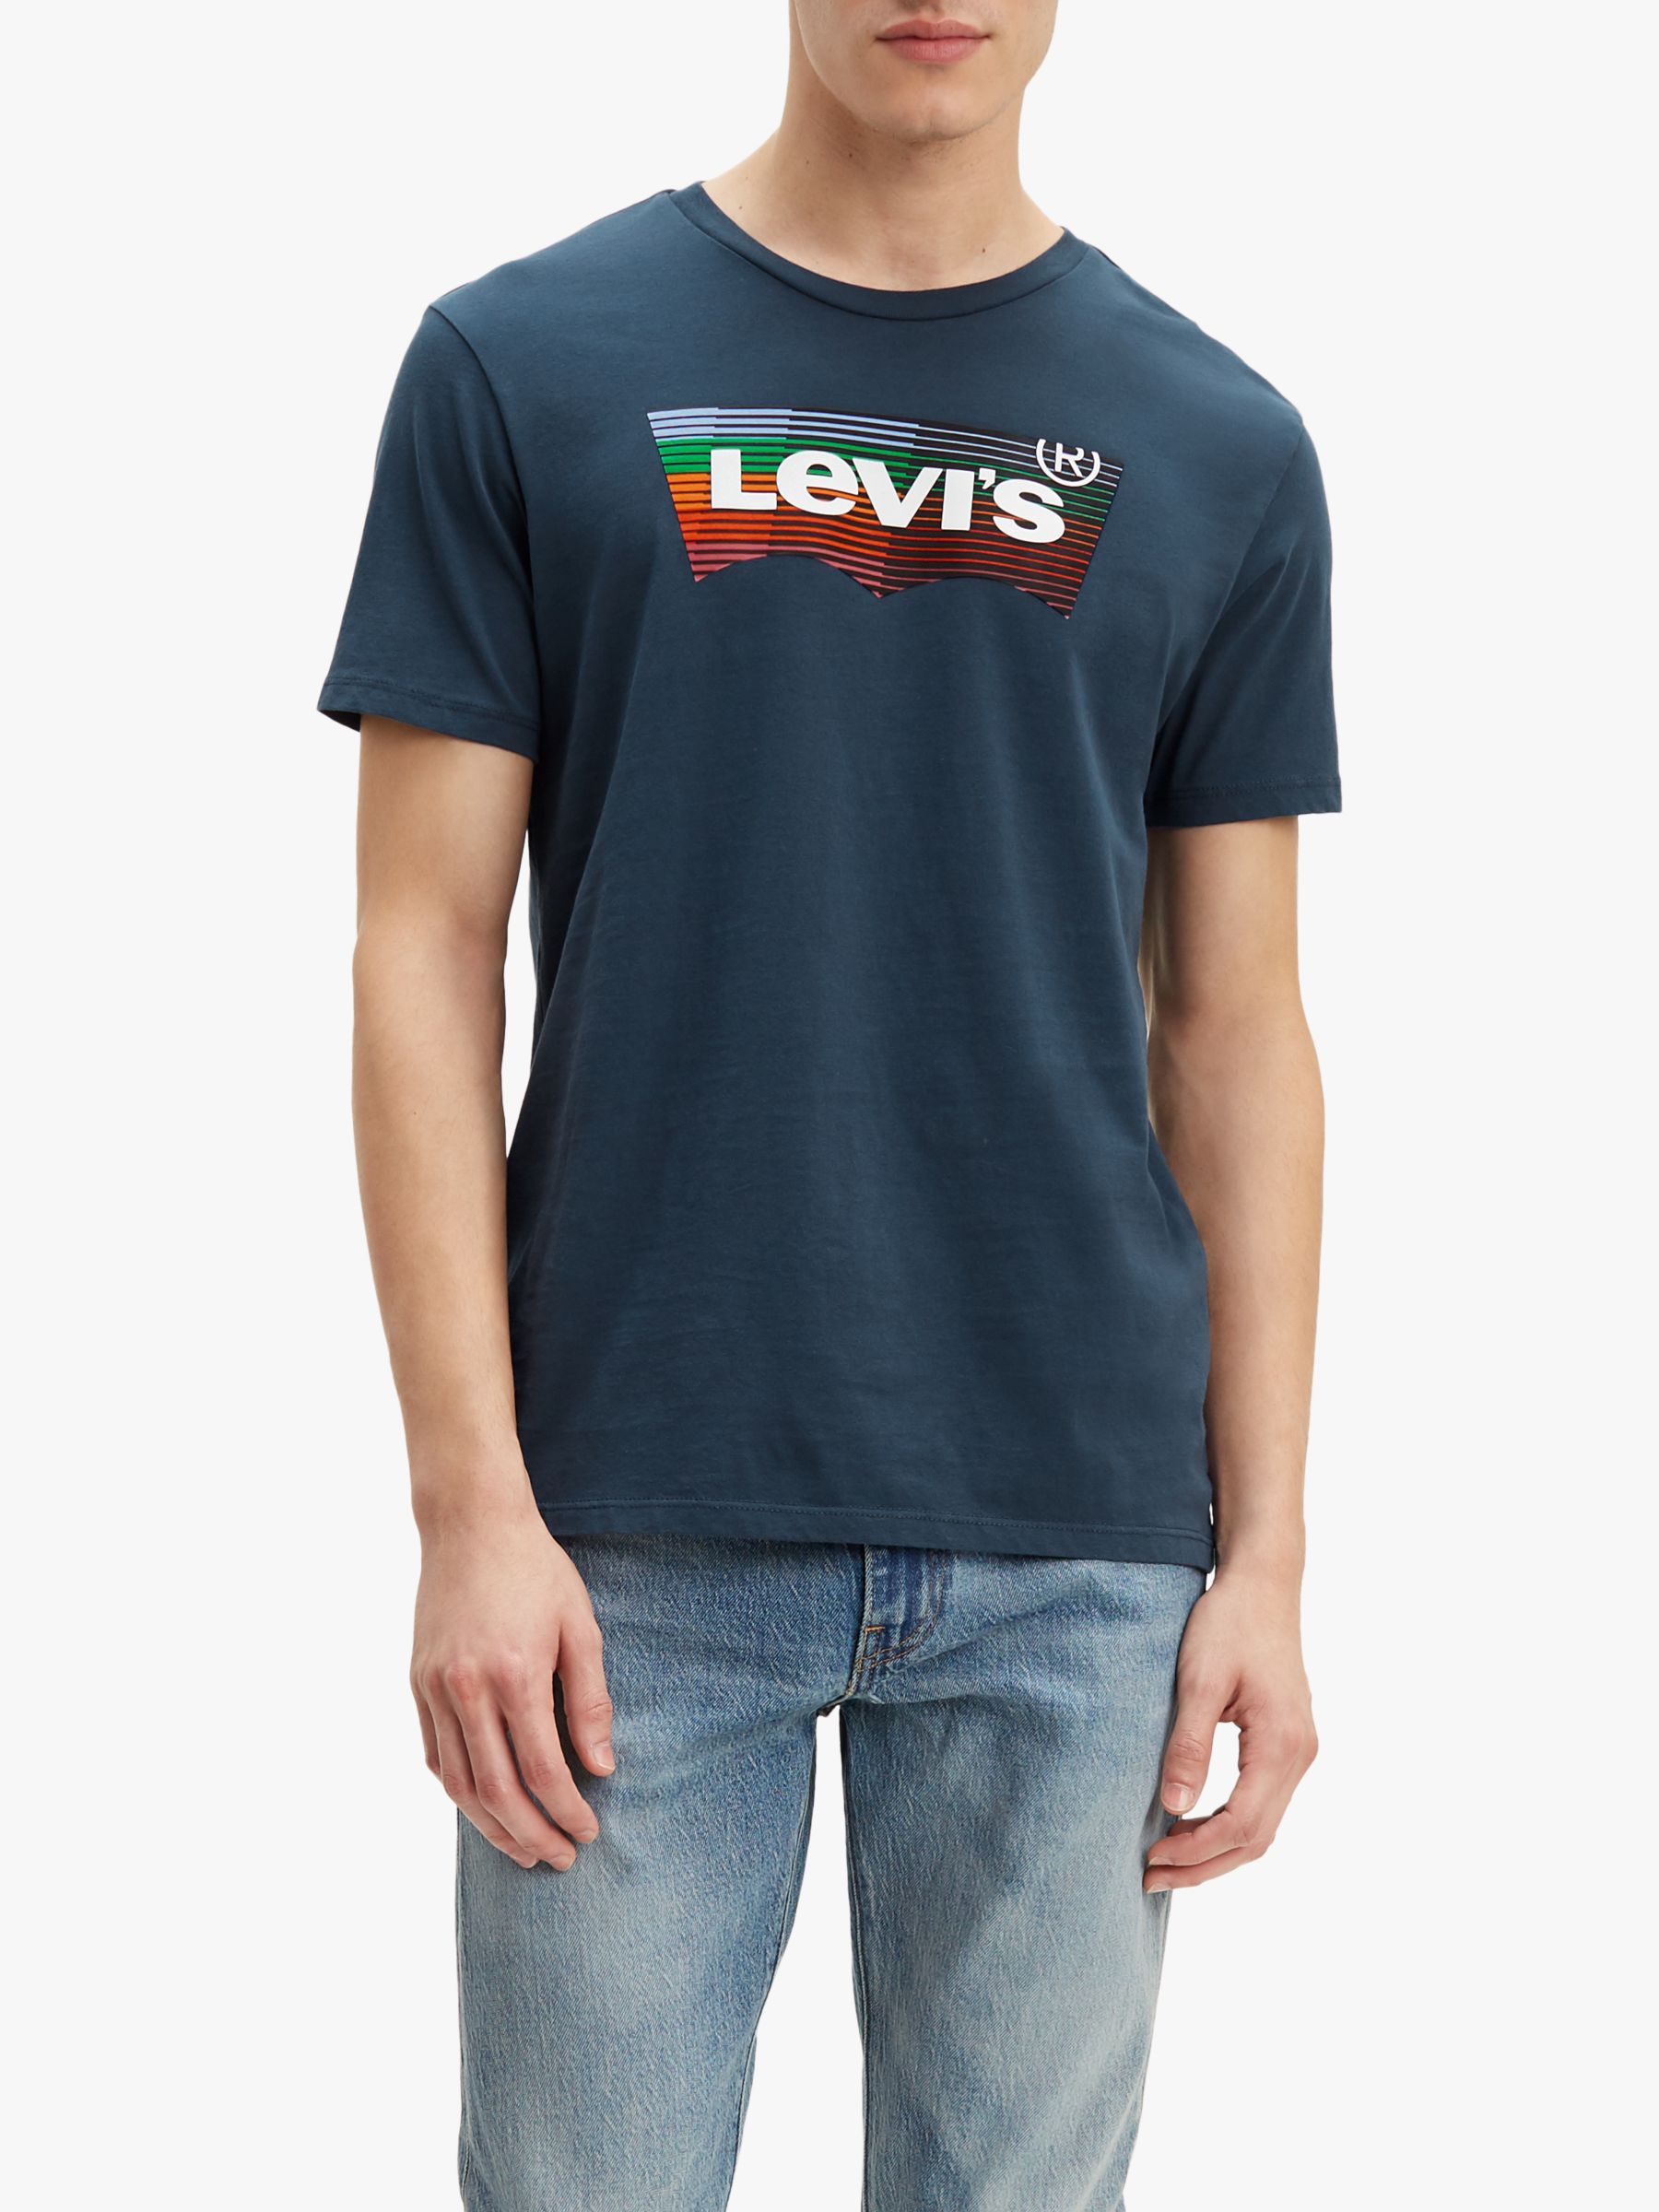 Levi's Housemark Graphic T-Shirt, Housemark Dress Blues